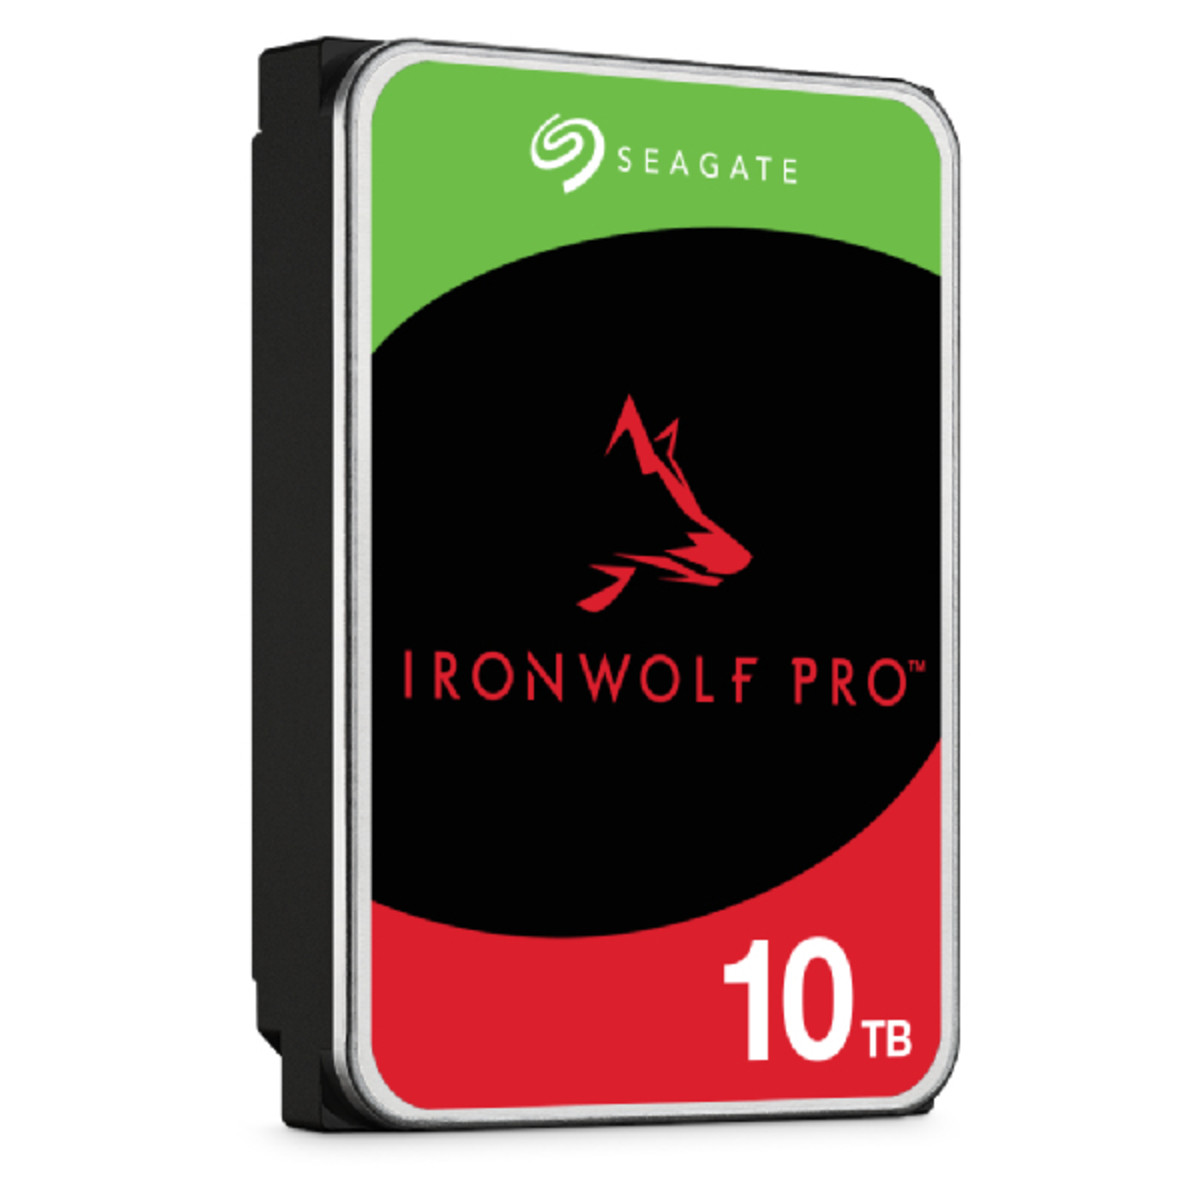 HDD Int 10TB Ironwolf Pro 72 SATA 3.5